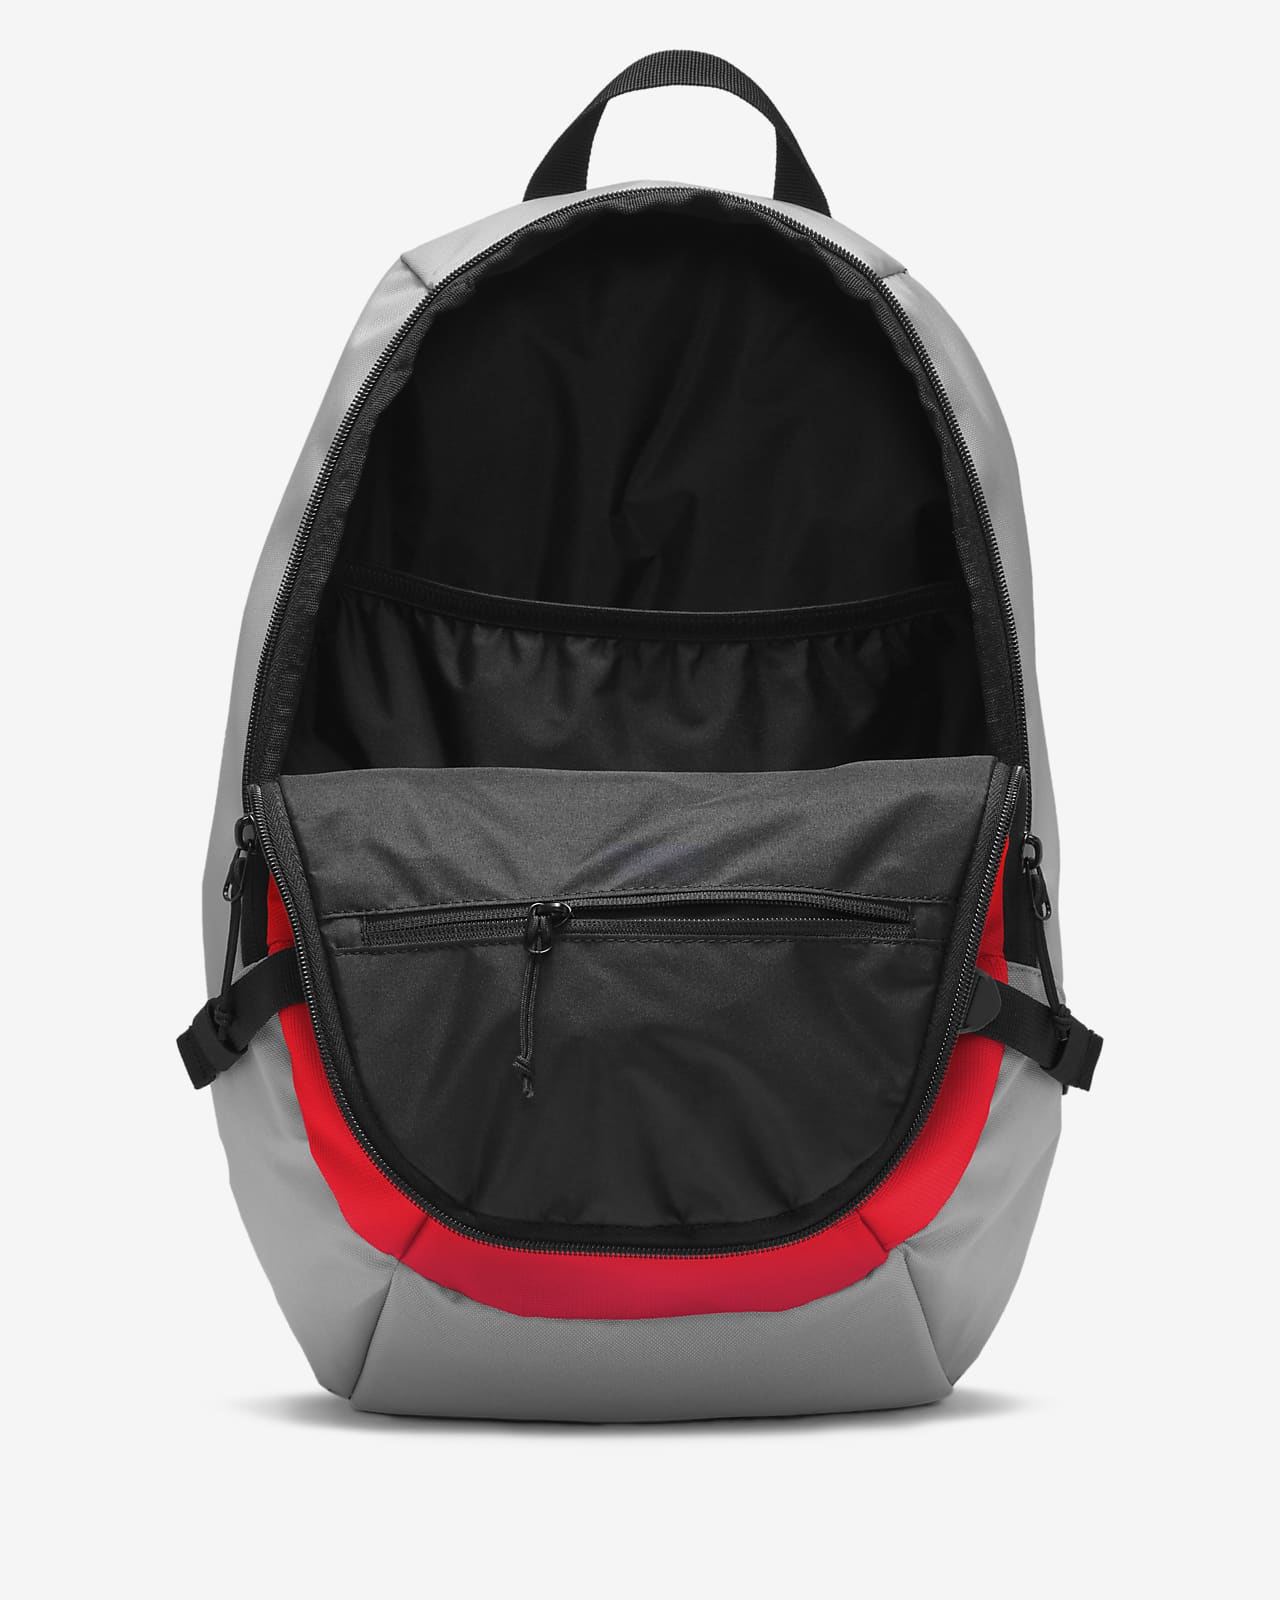 NIKE backpack Elemental Grey | NICKIS.com